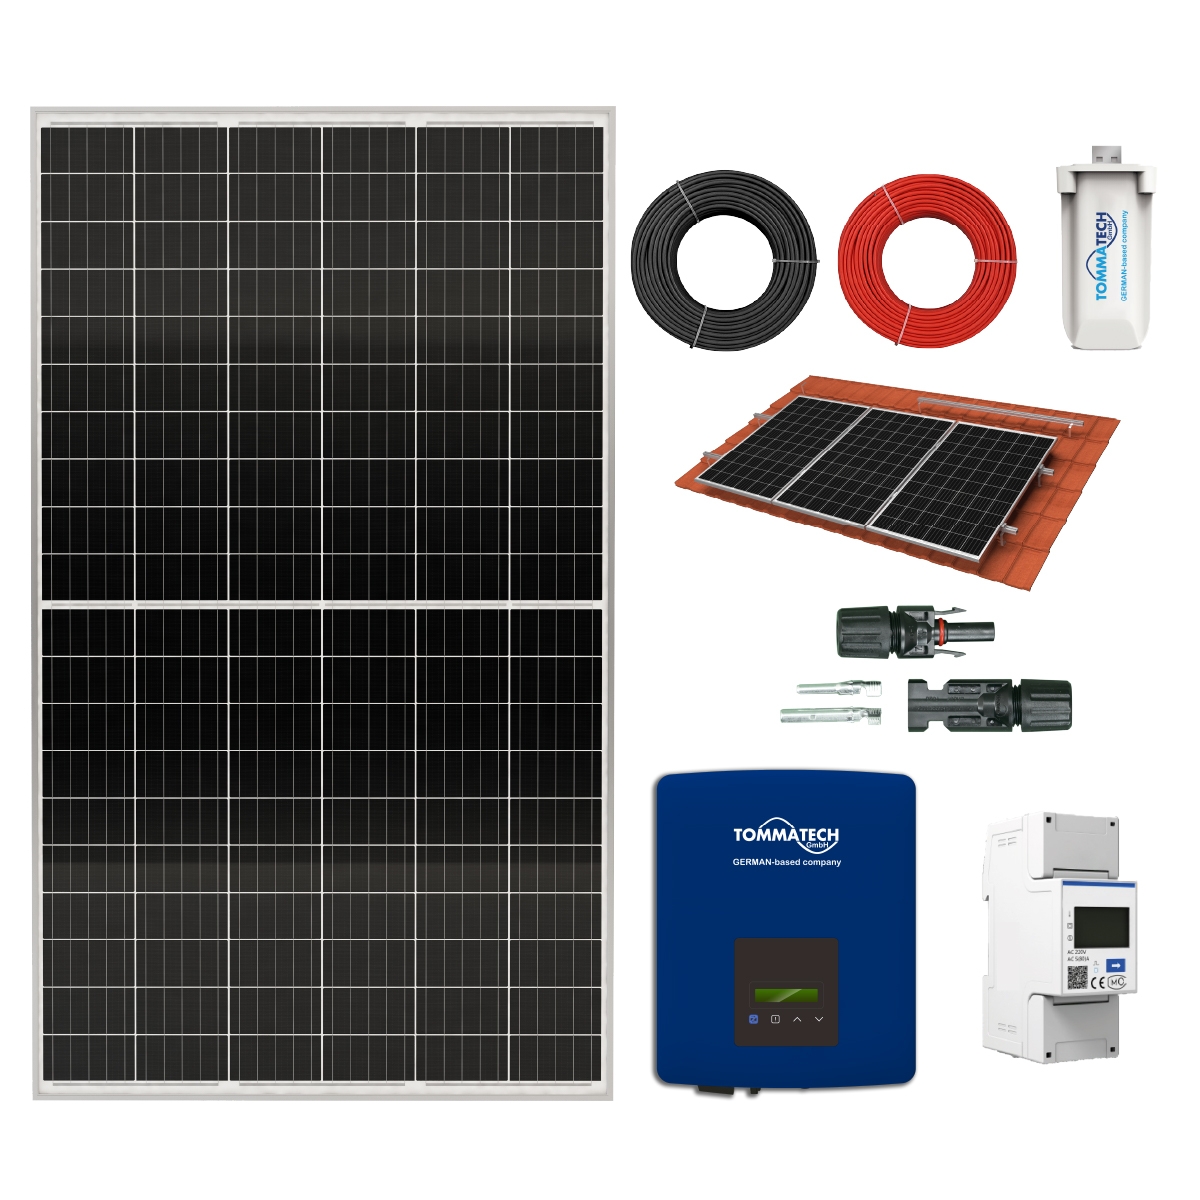 3kW / 4.18kWp Solar On-Grid Plug & Play Solution